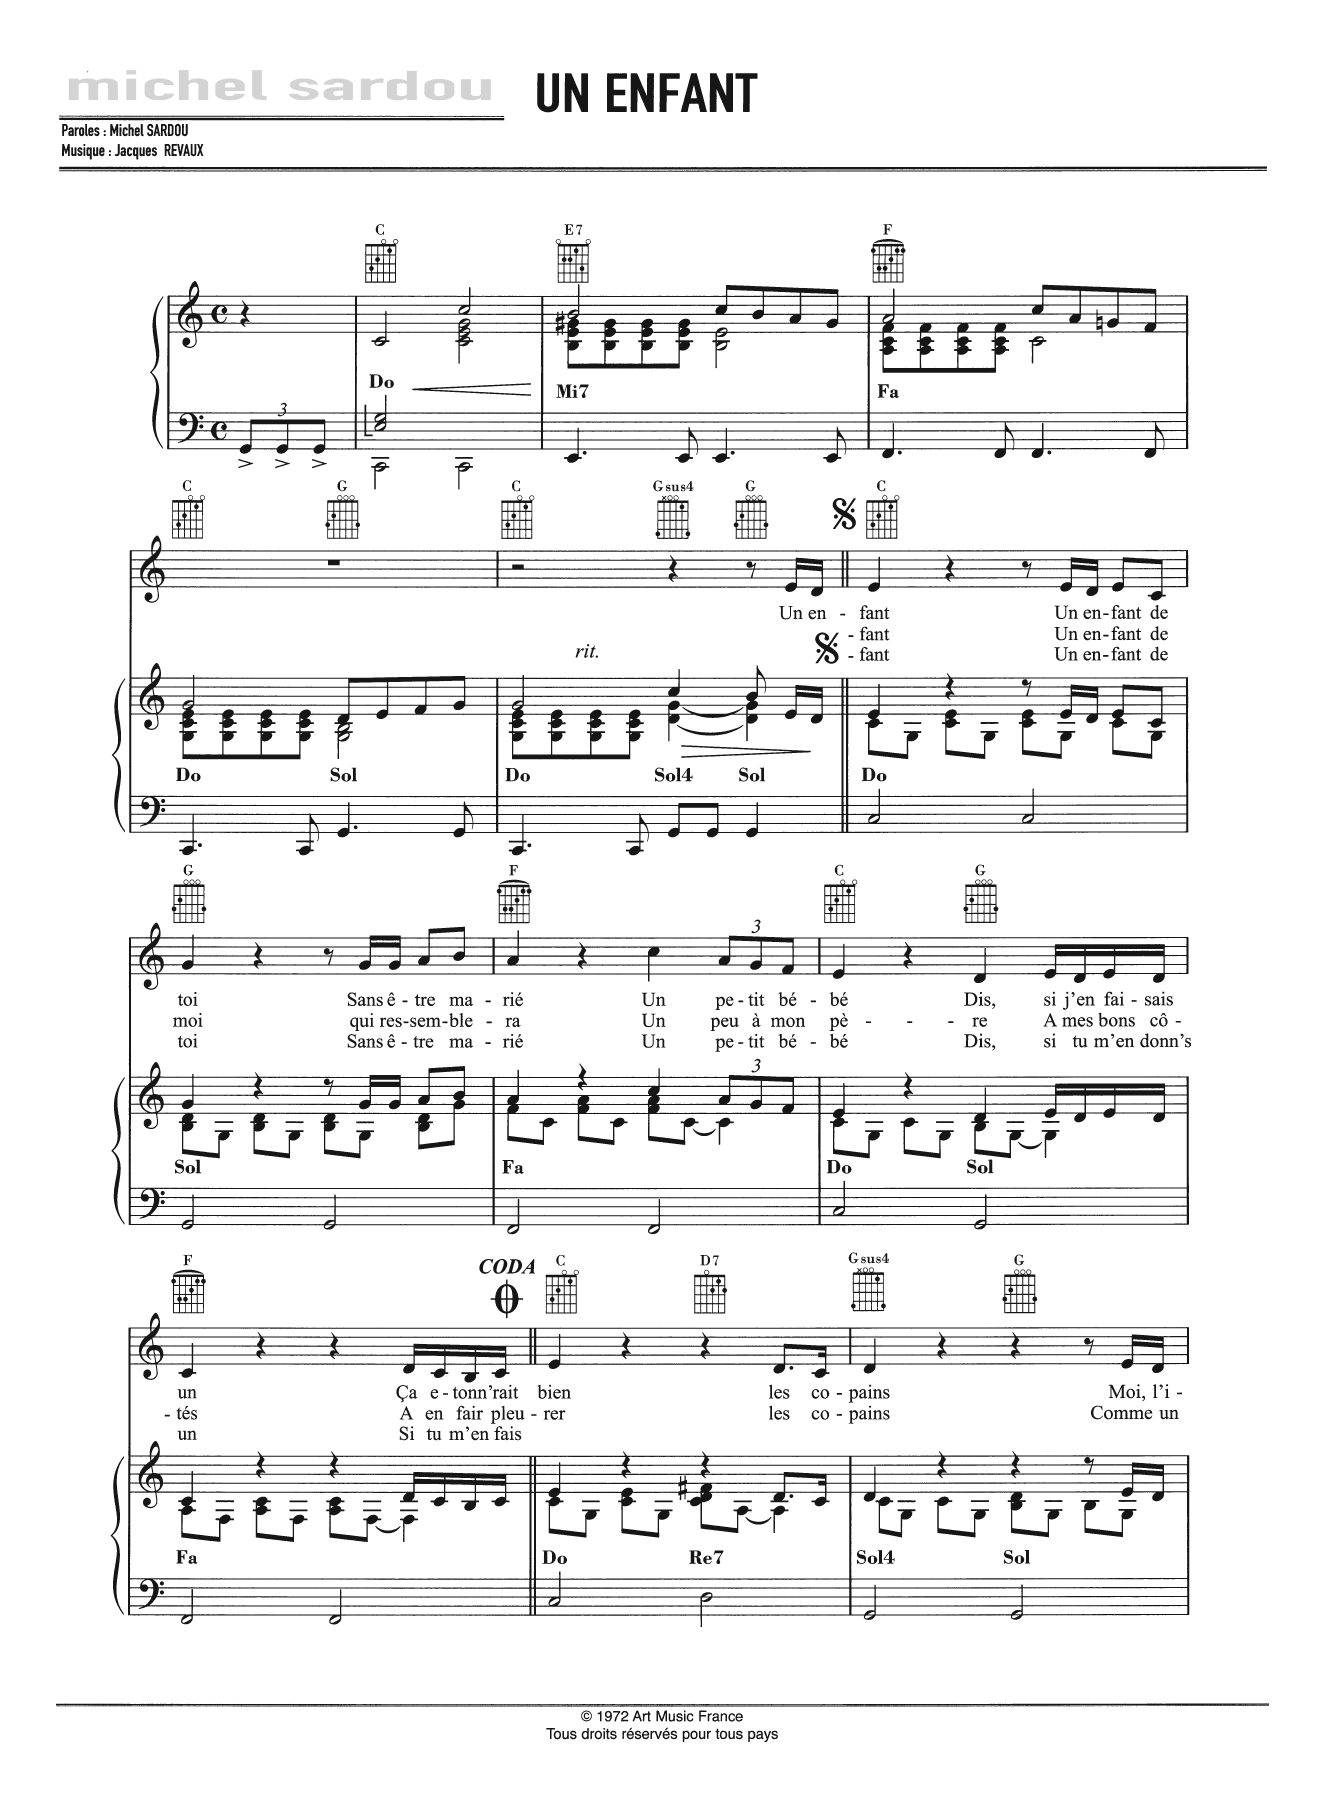 Michel Sardou Un Enfant Sheet Music Notes & Chords for Piano, Vocal & Guitar - Download or Print PDF